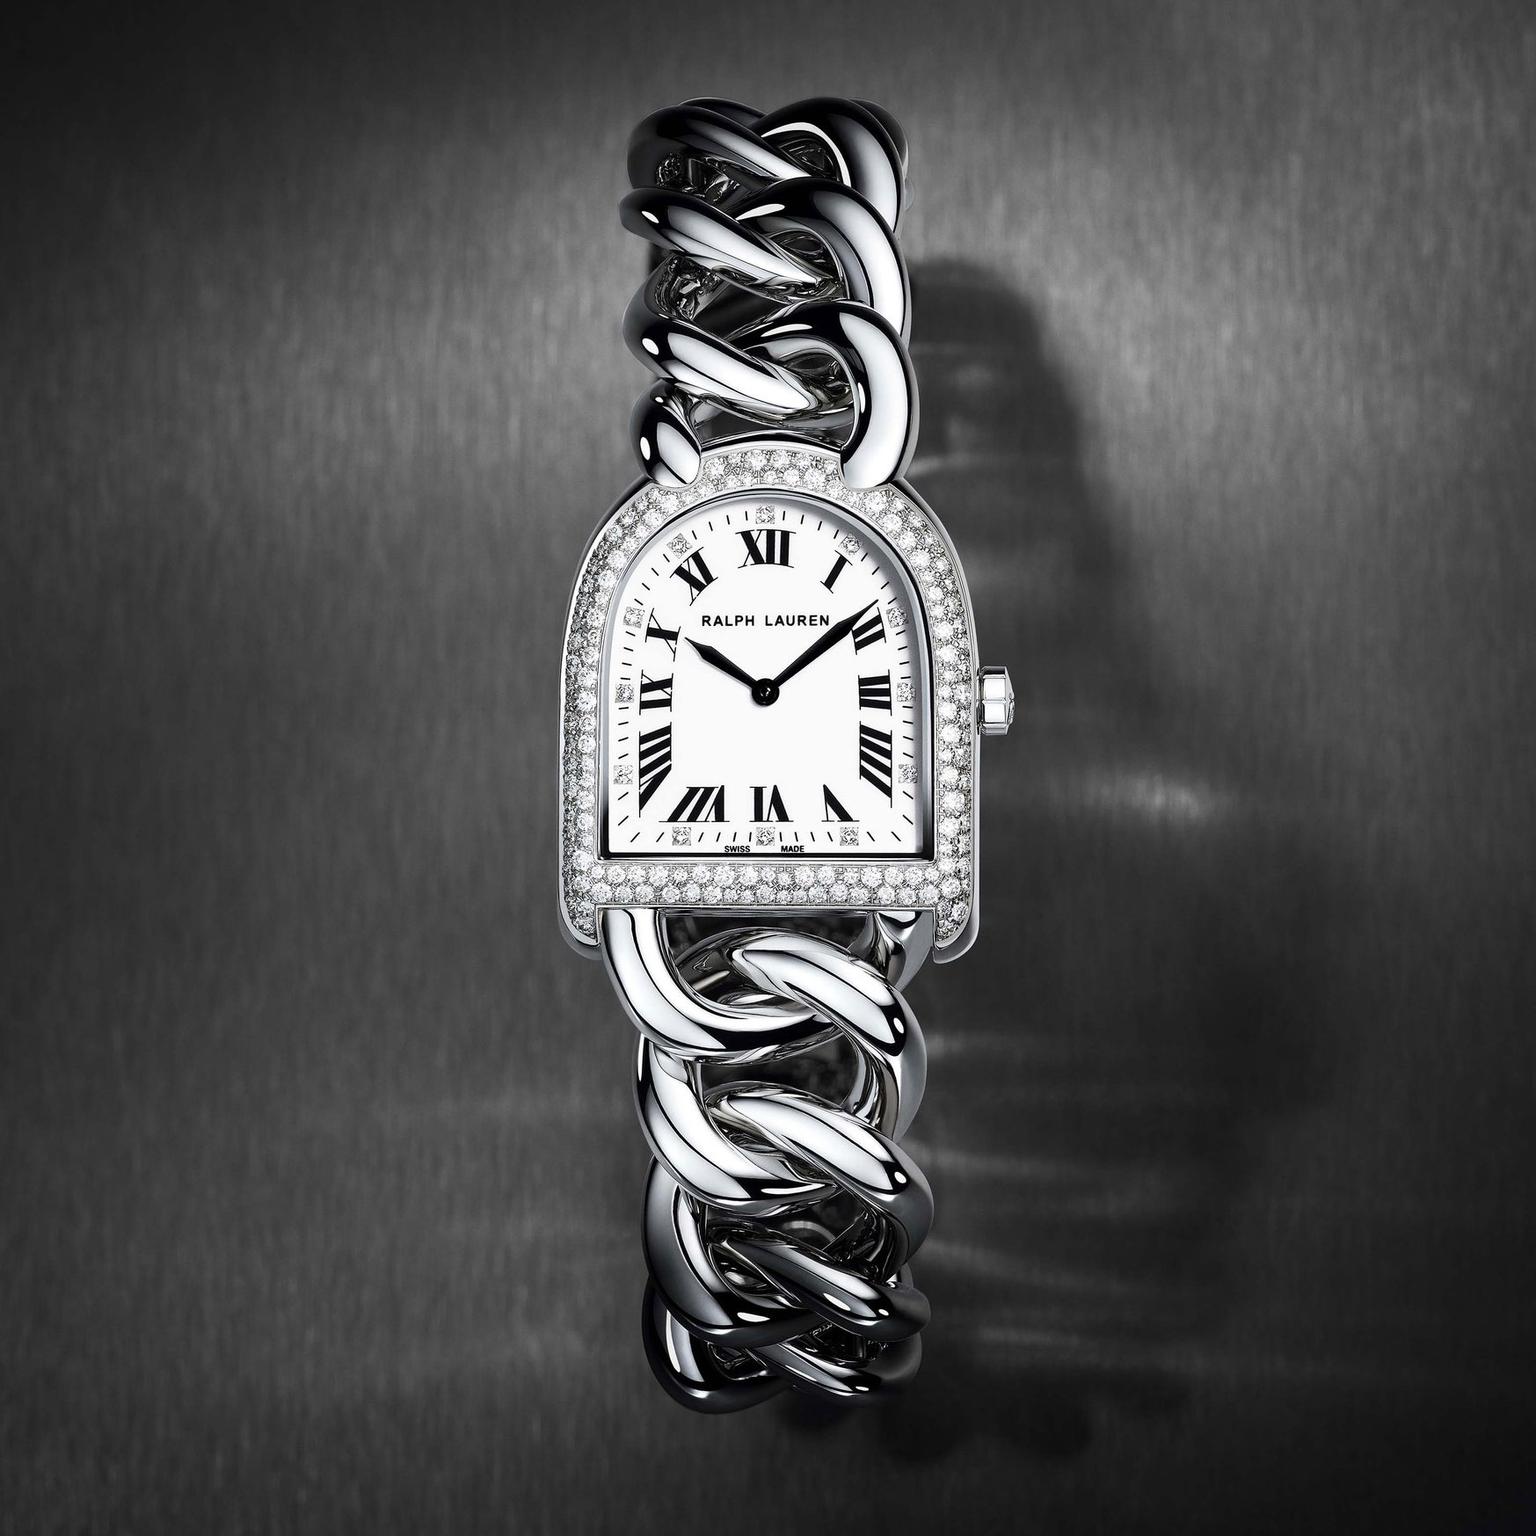 Ralph Lauren's Petite Link Stirrup watch with diamond bezel